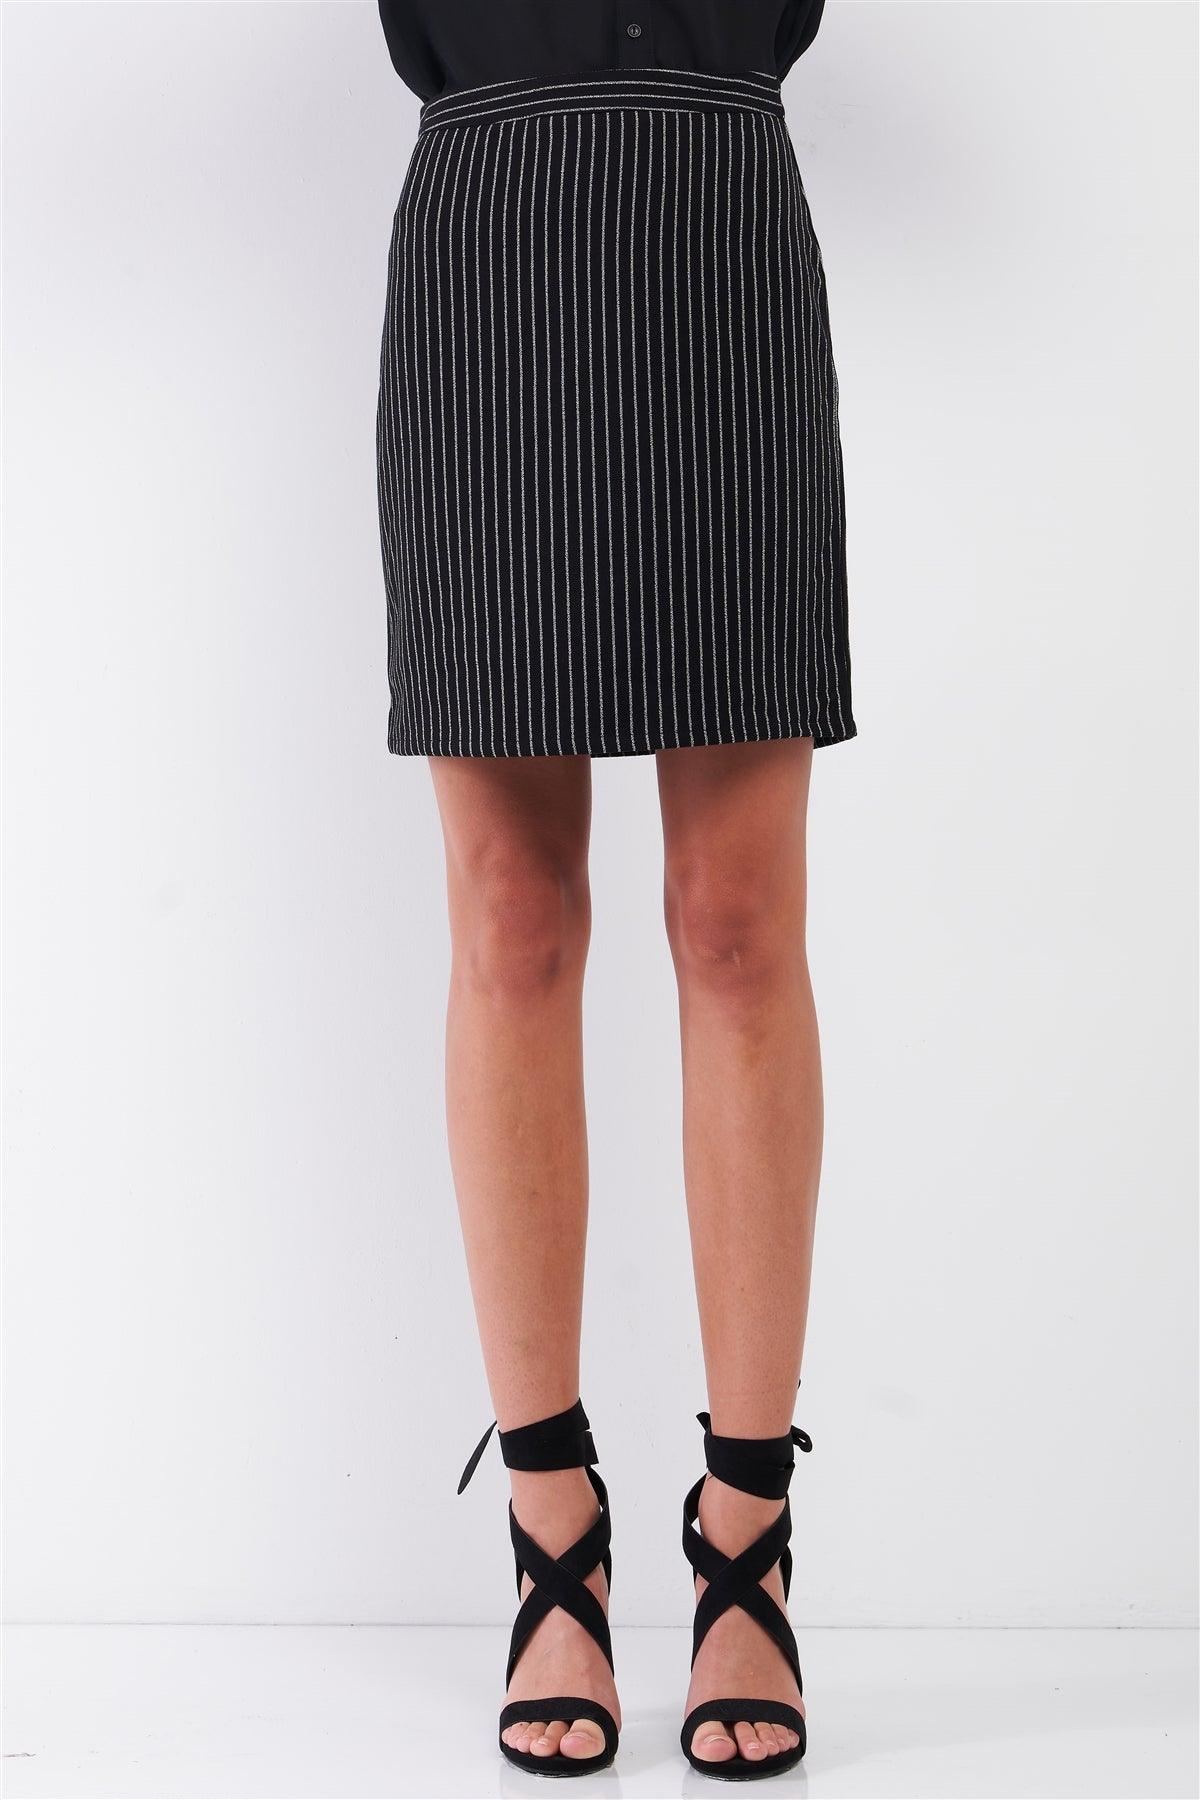 Black & White Striped High-Waisted Pencil Mini Skirt /1-1-2-1